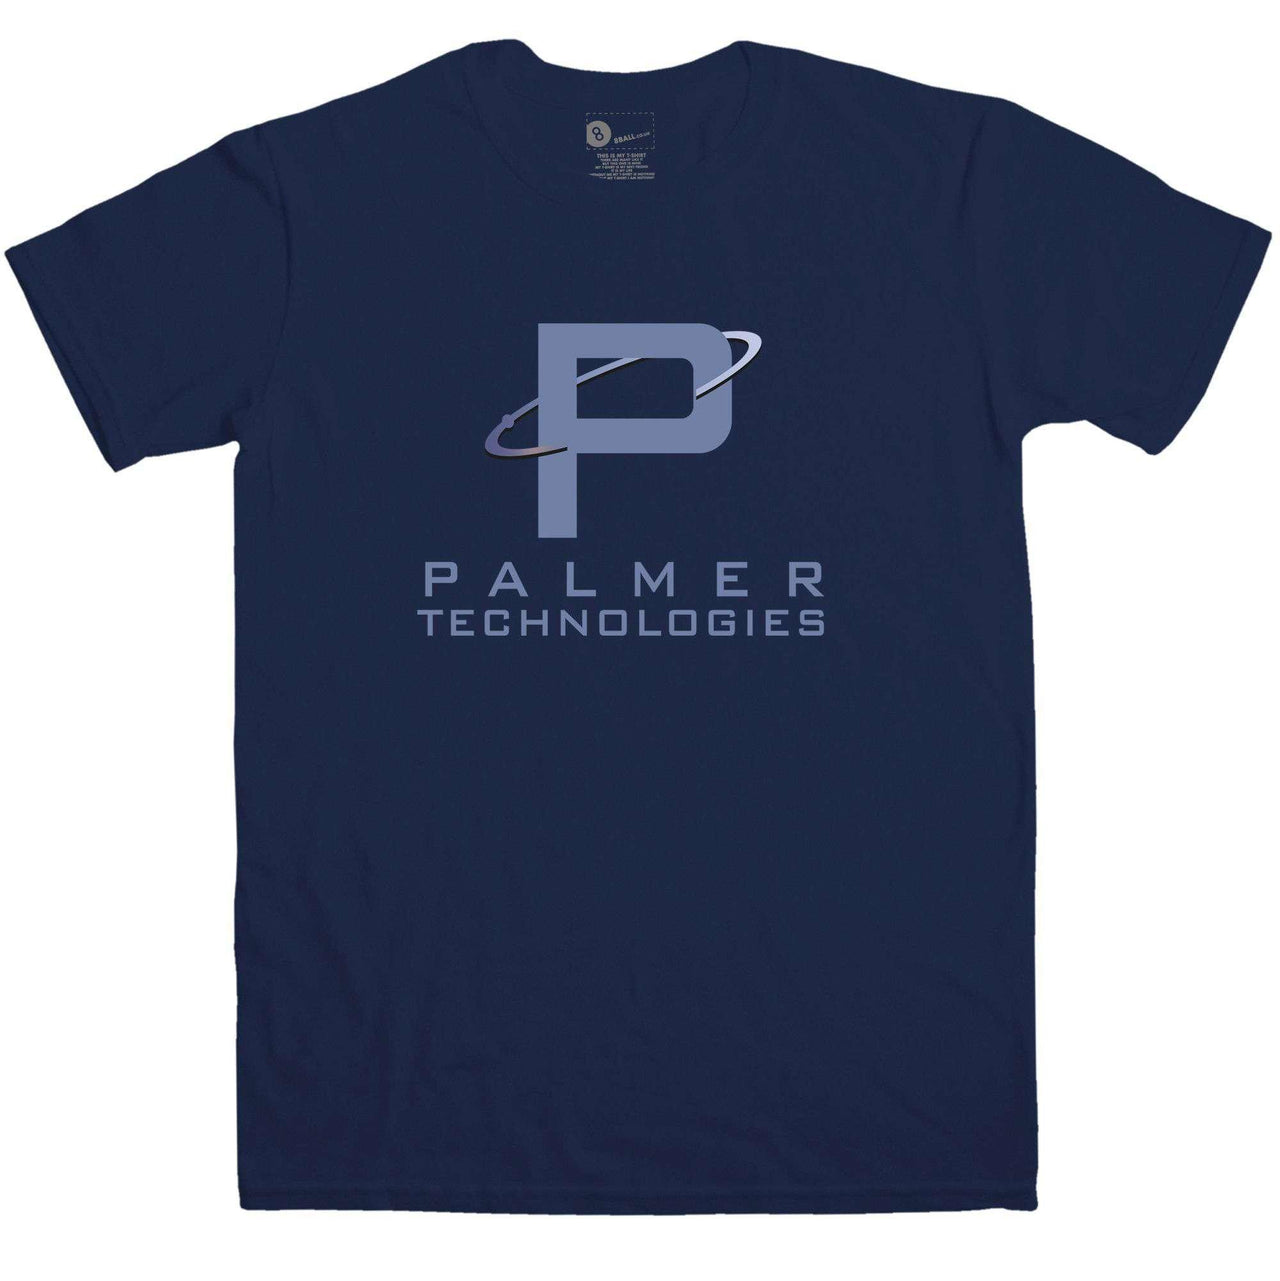 Palmer Technologies Graphic T-Shirt For Men 8Ball